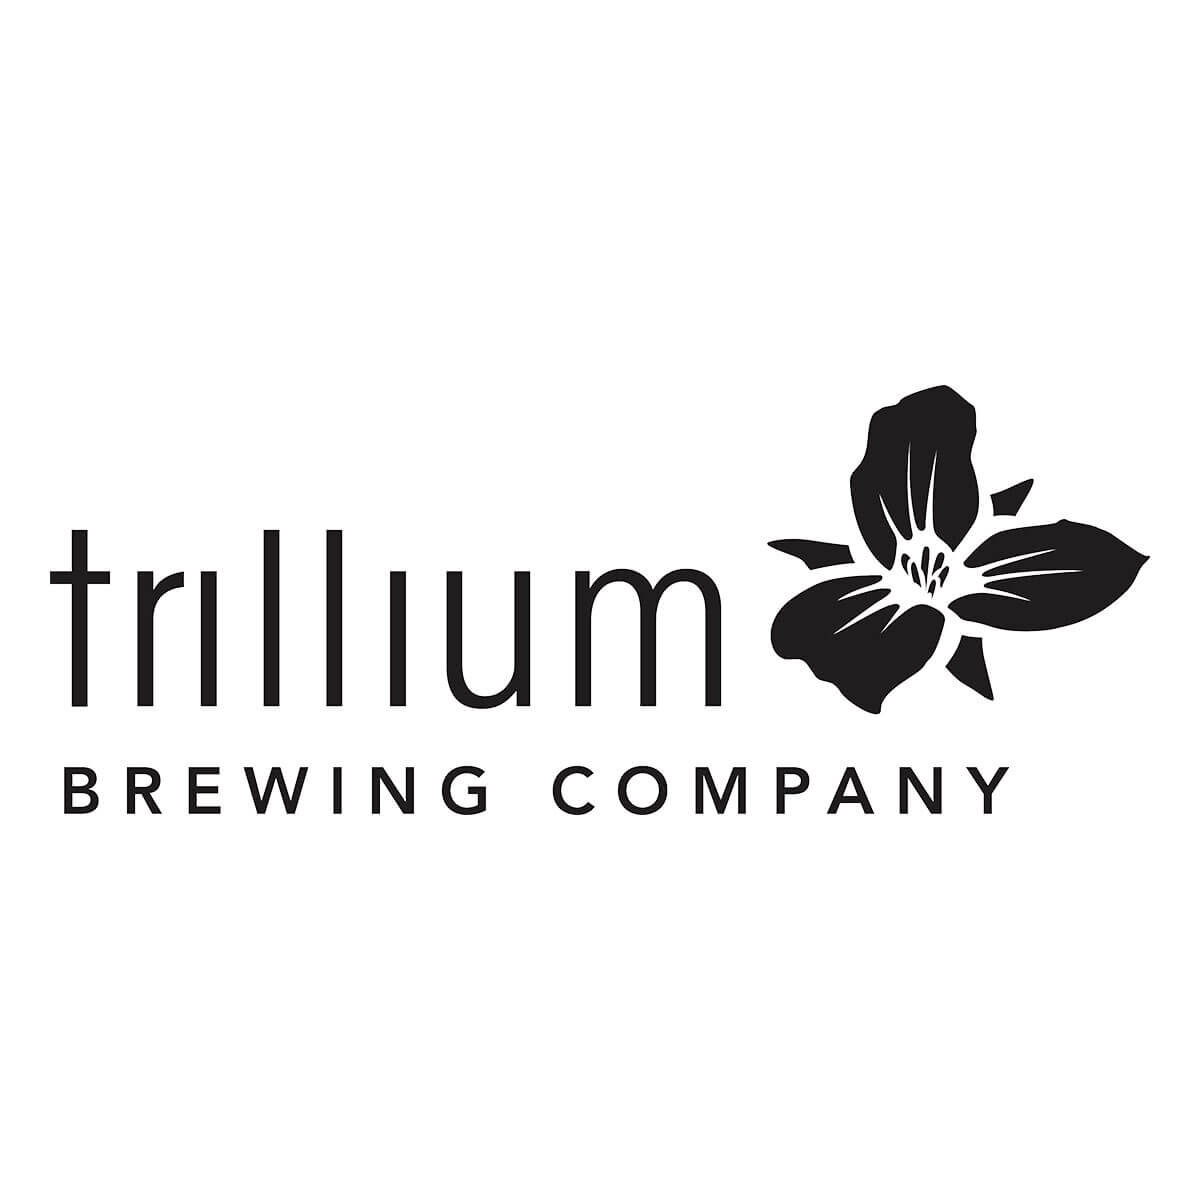 AB-Breweries-Trillium-Brewing-Company-Logo-1.jpg